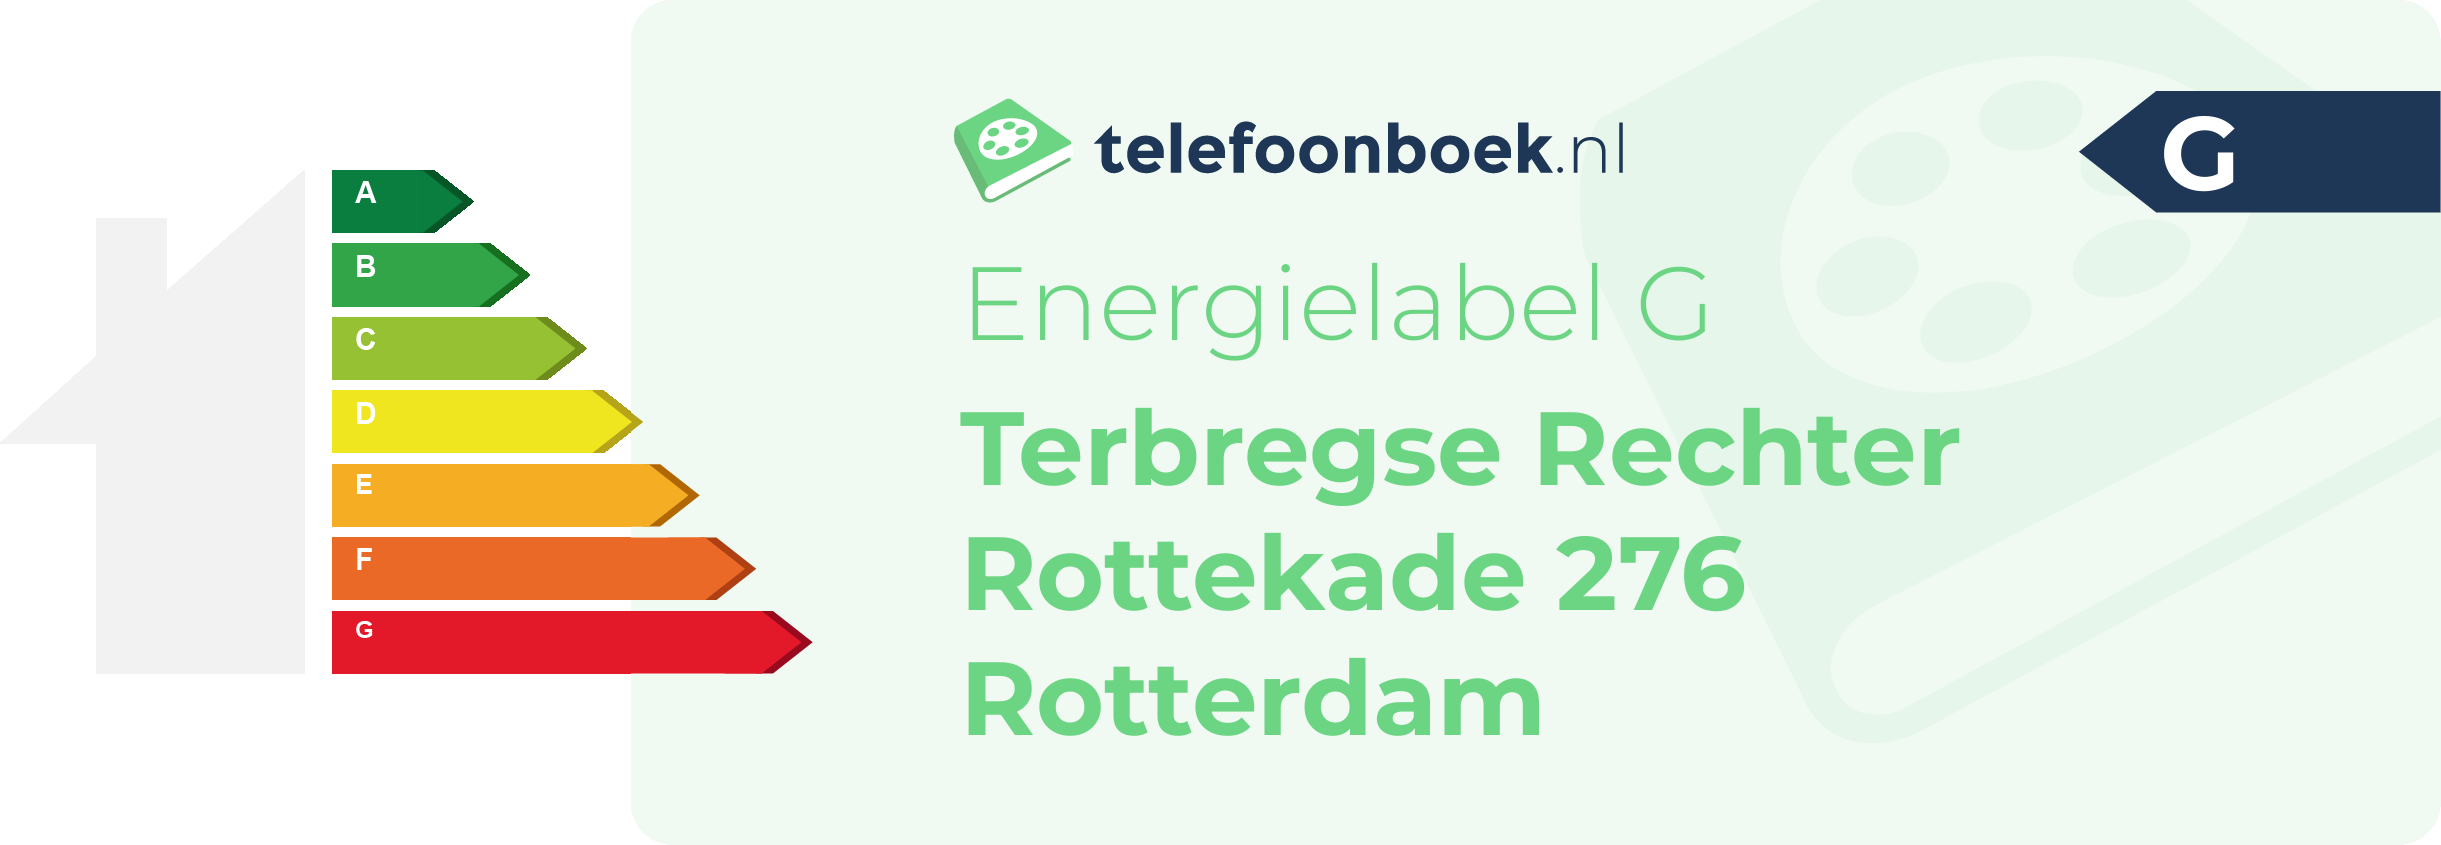 Energielabel Terbregse Rechter Rottekade 276 Rotterdam